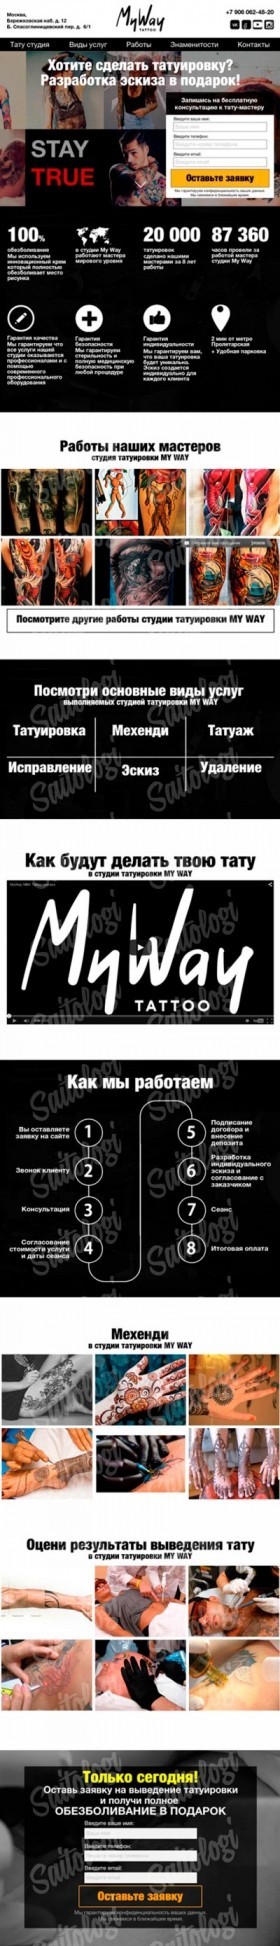 Создание сайта тату салона My Way Tattoo в Москве под ключ